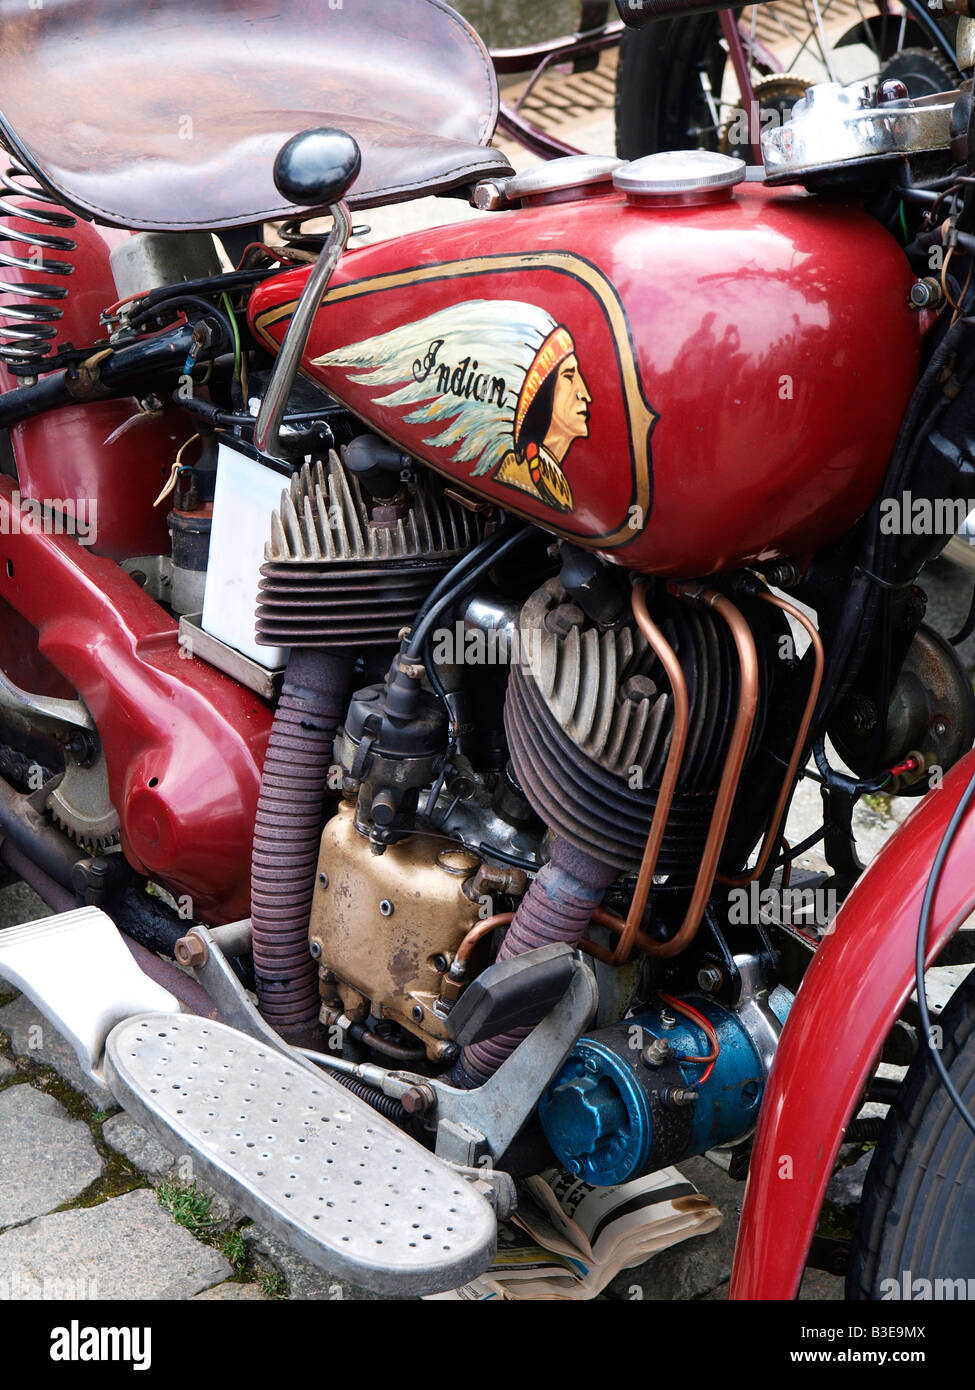 Red vintage Indian motorcycle closeup Breda Noord Brabant Netherlands Stock Photo